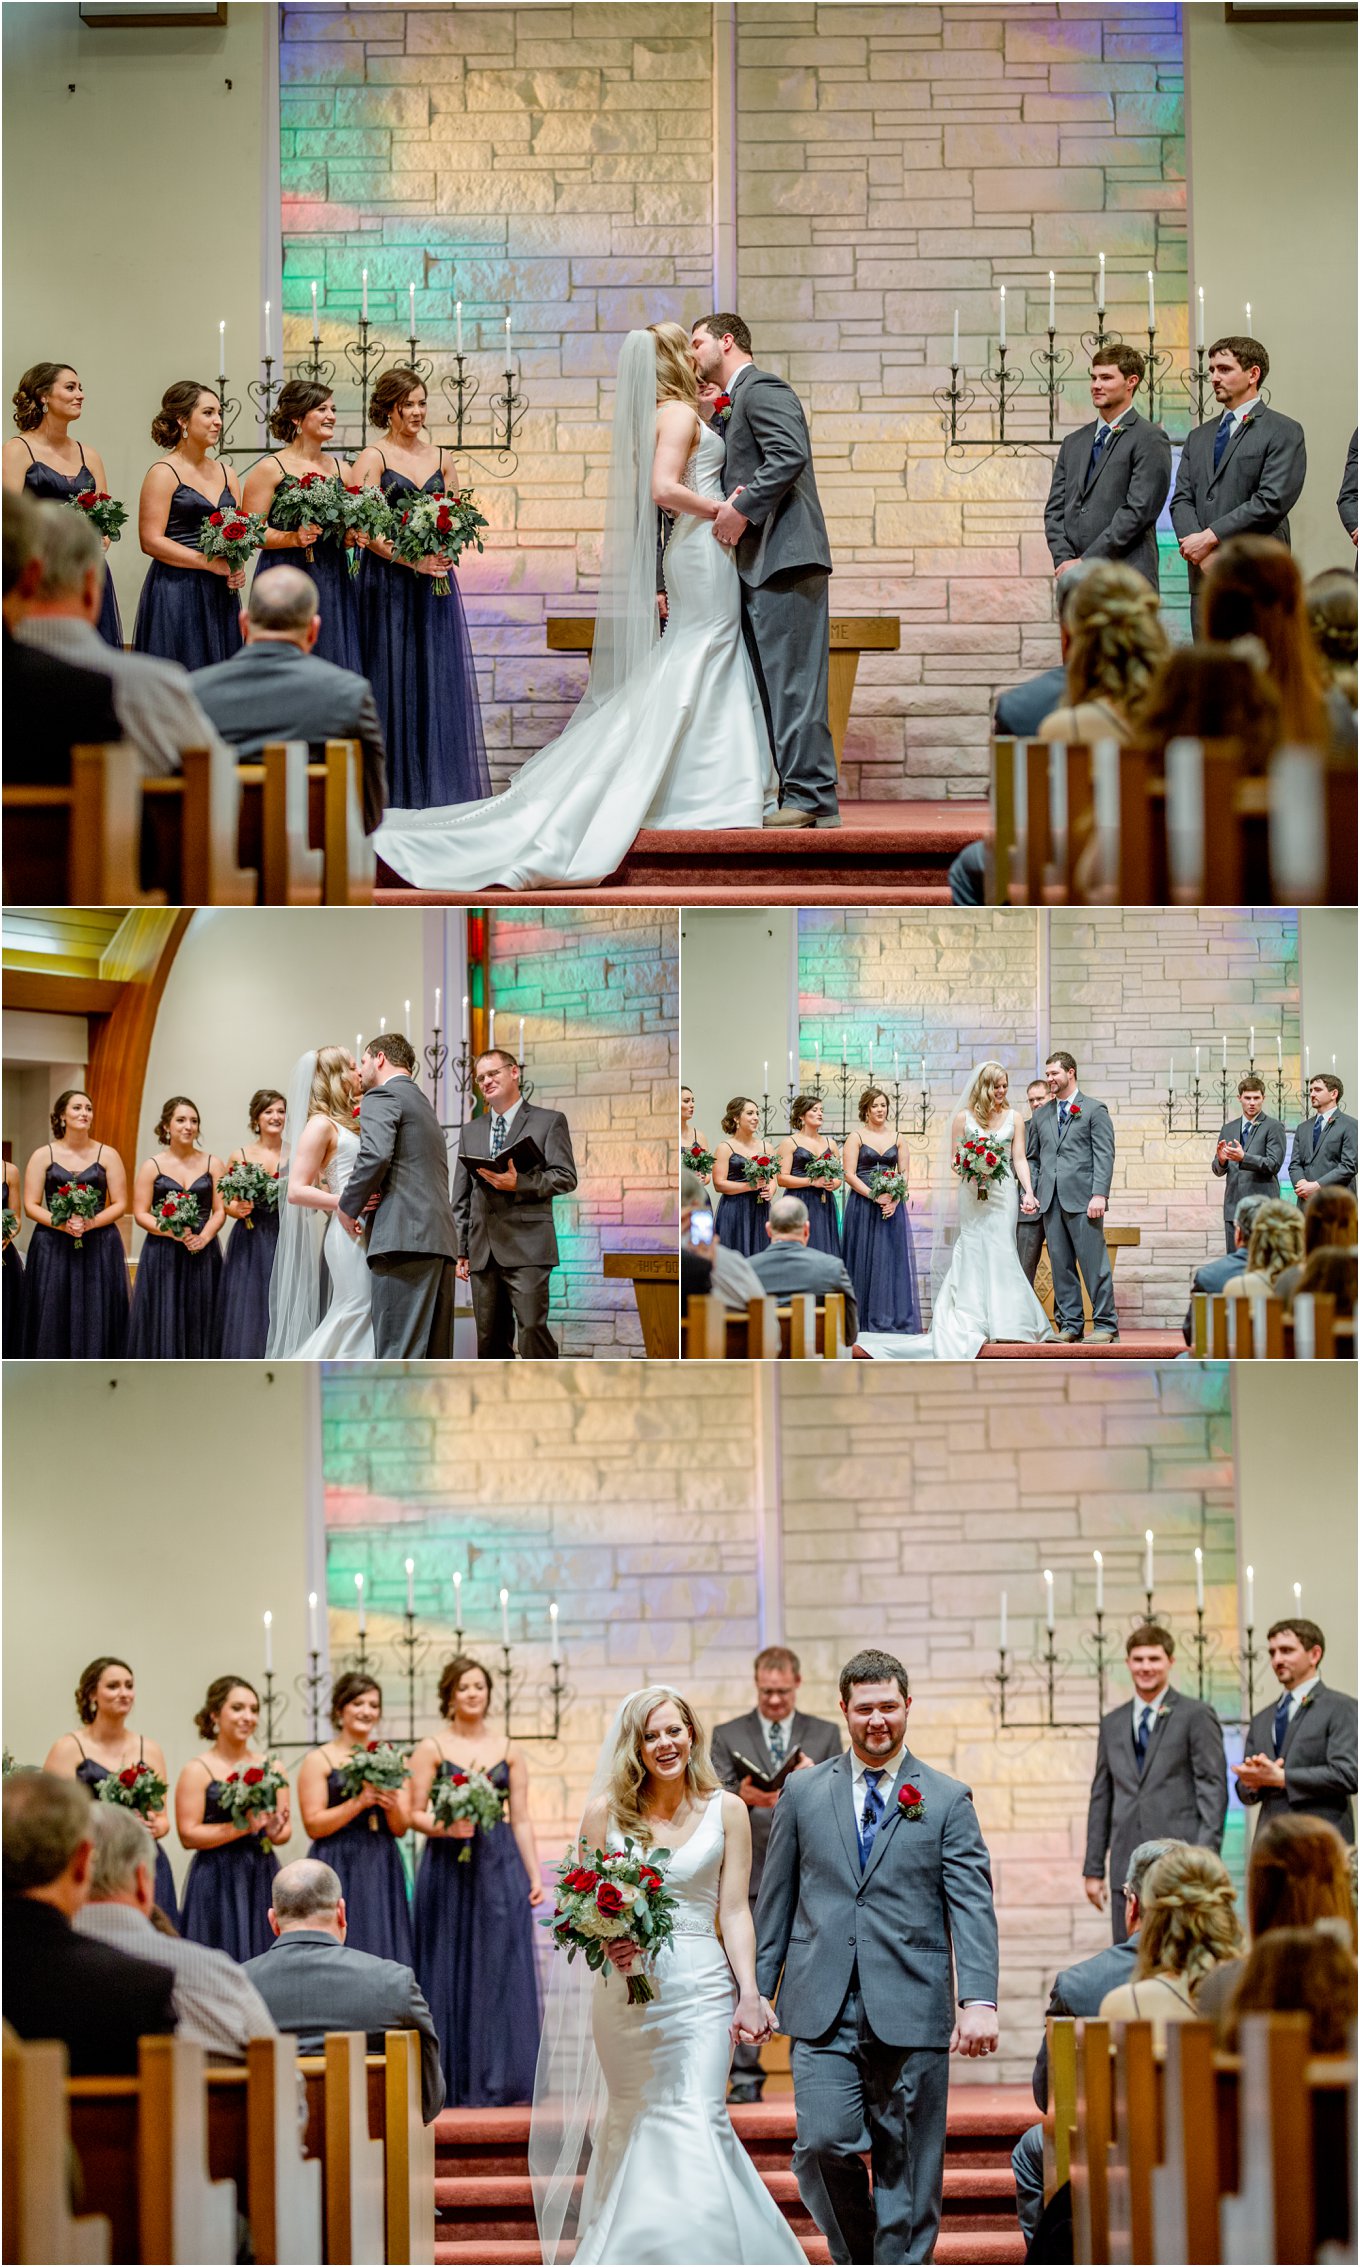 Central Nebraska Wedding by Greeley, Colorado Based Wedding Photographer